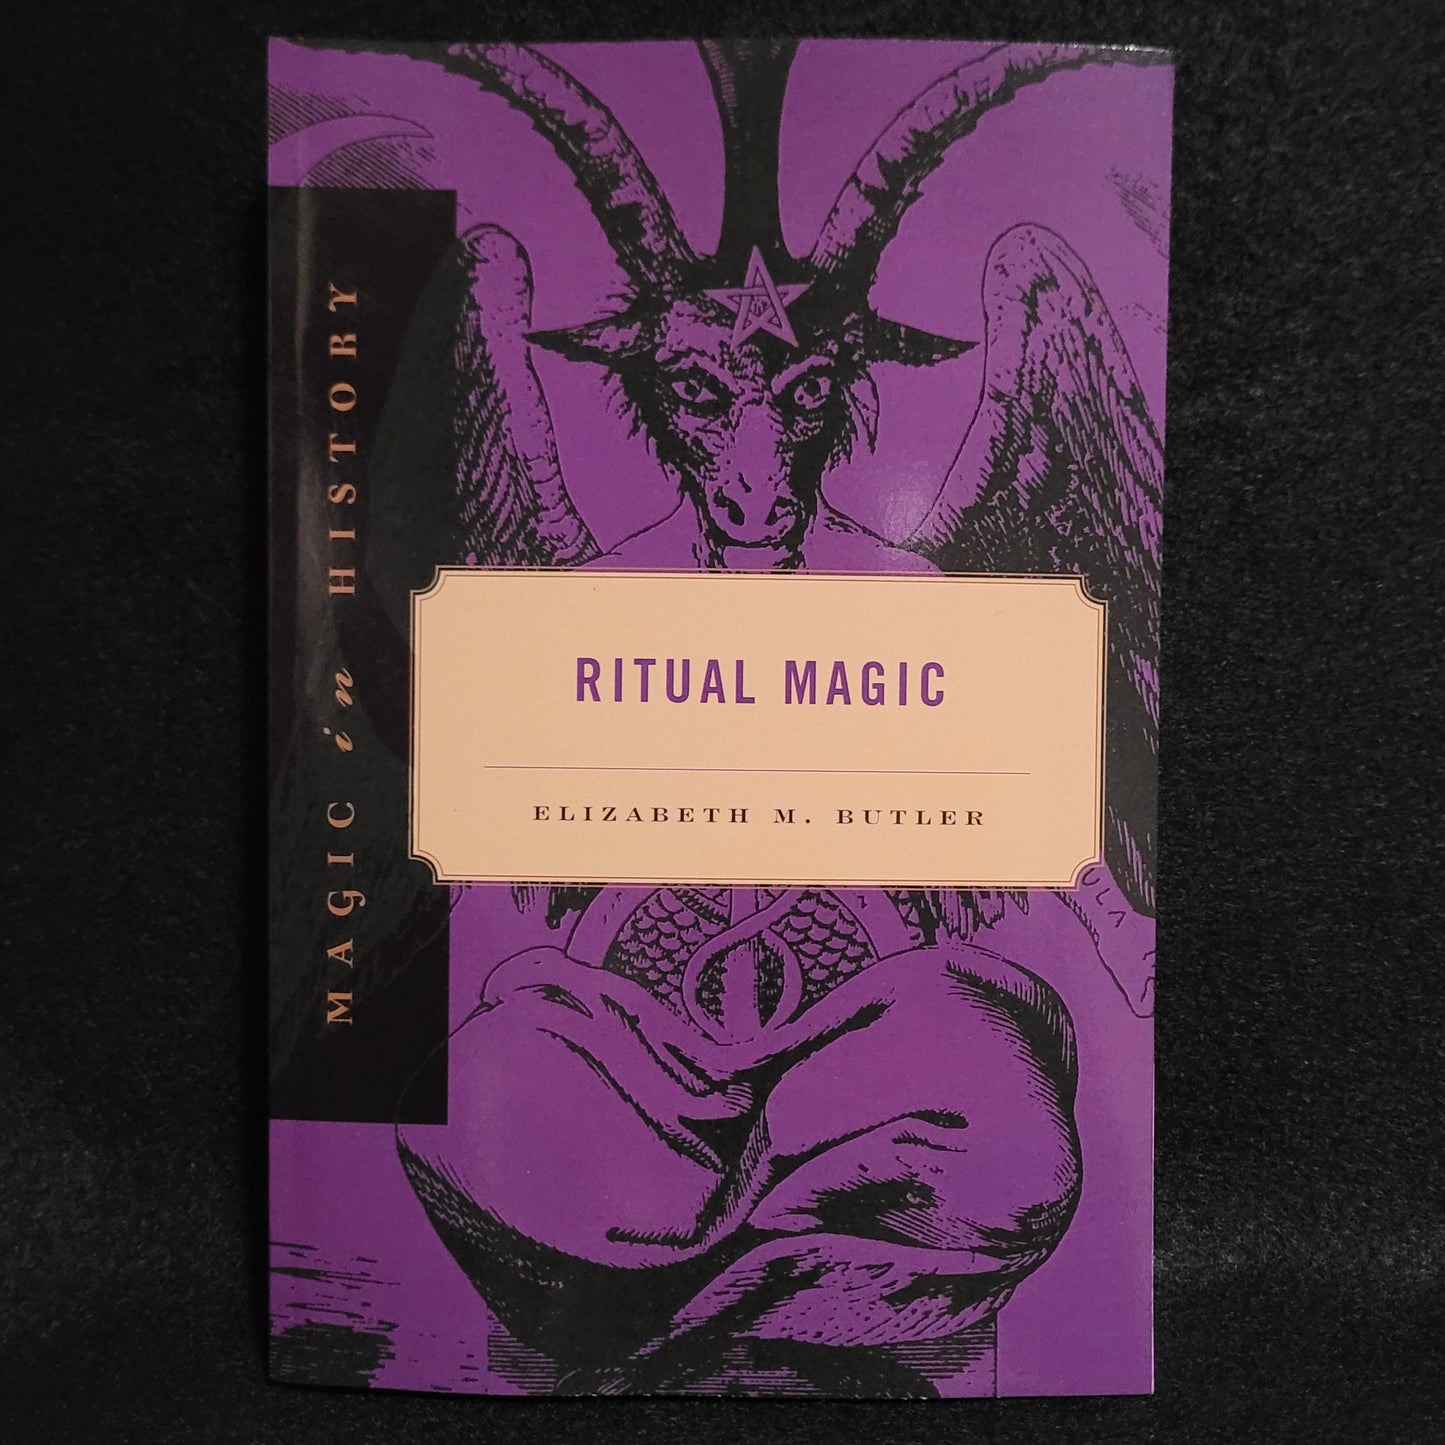 Ritual Magic by Elizabeth M. Butler (The Pennsylvania State University Press, 2002) Magic in History Series Paperback